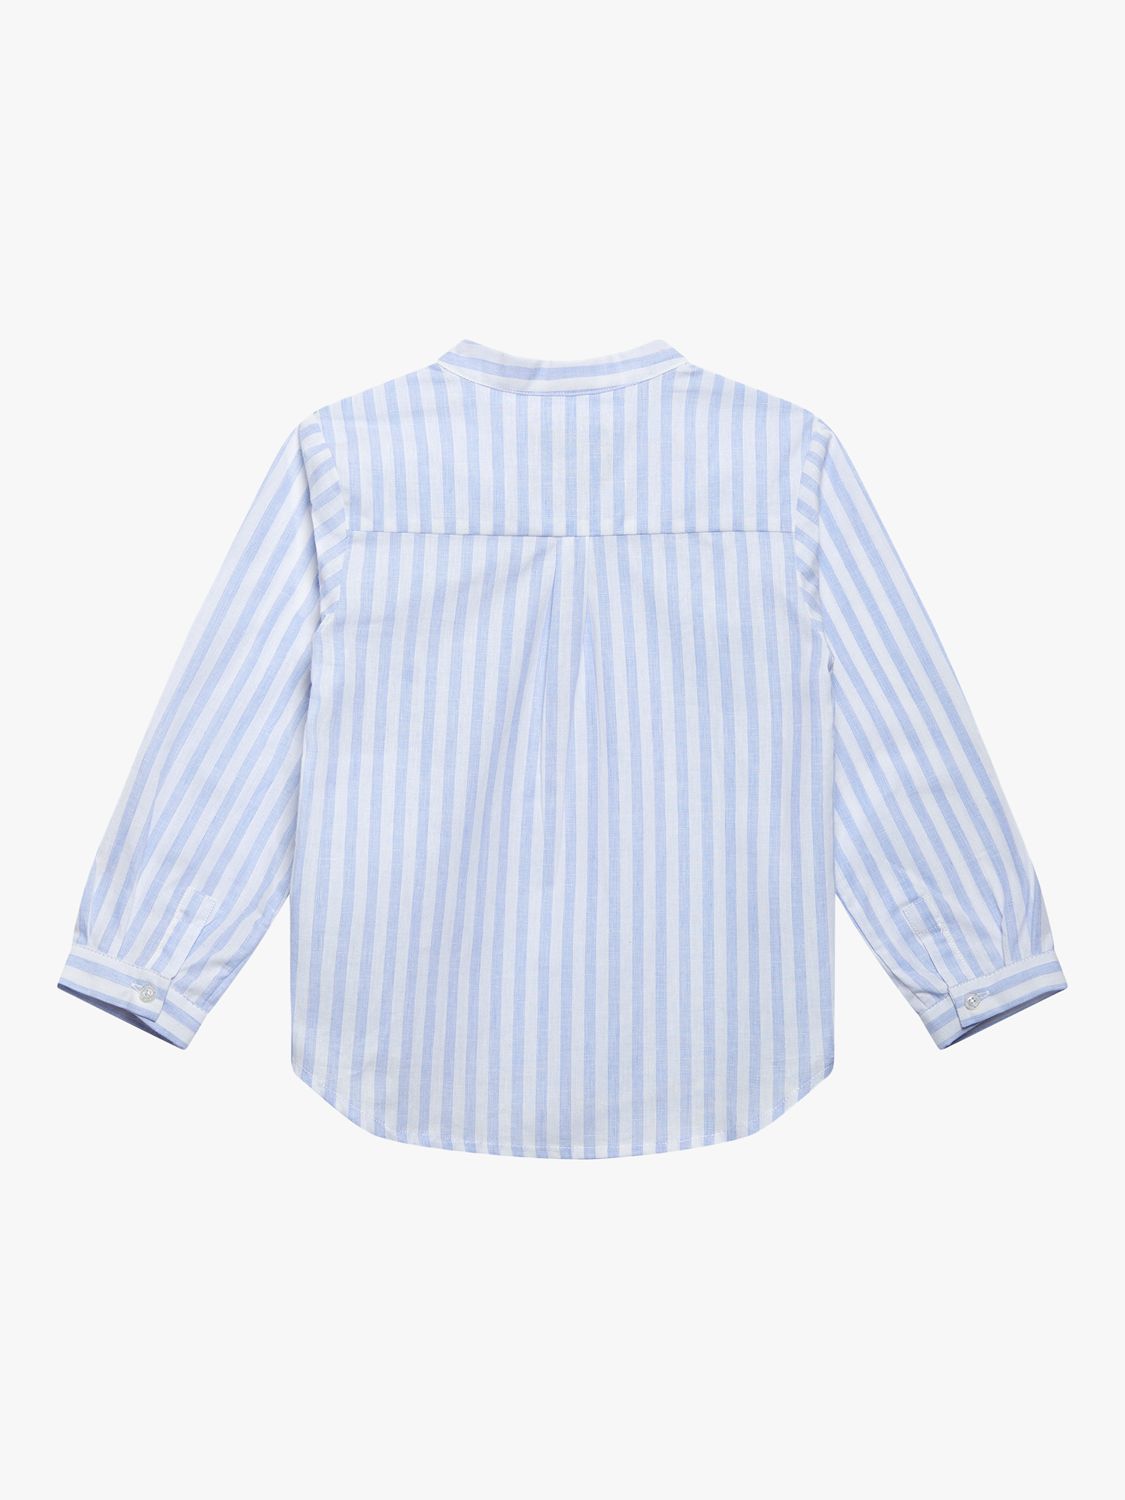 Buy Trotters Kids' Oscar Collarless Stripe Shirt, Pale Blue Online at johnlewis.com